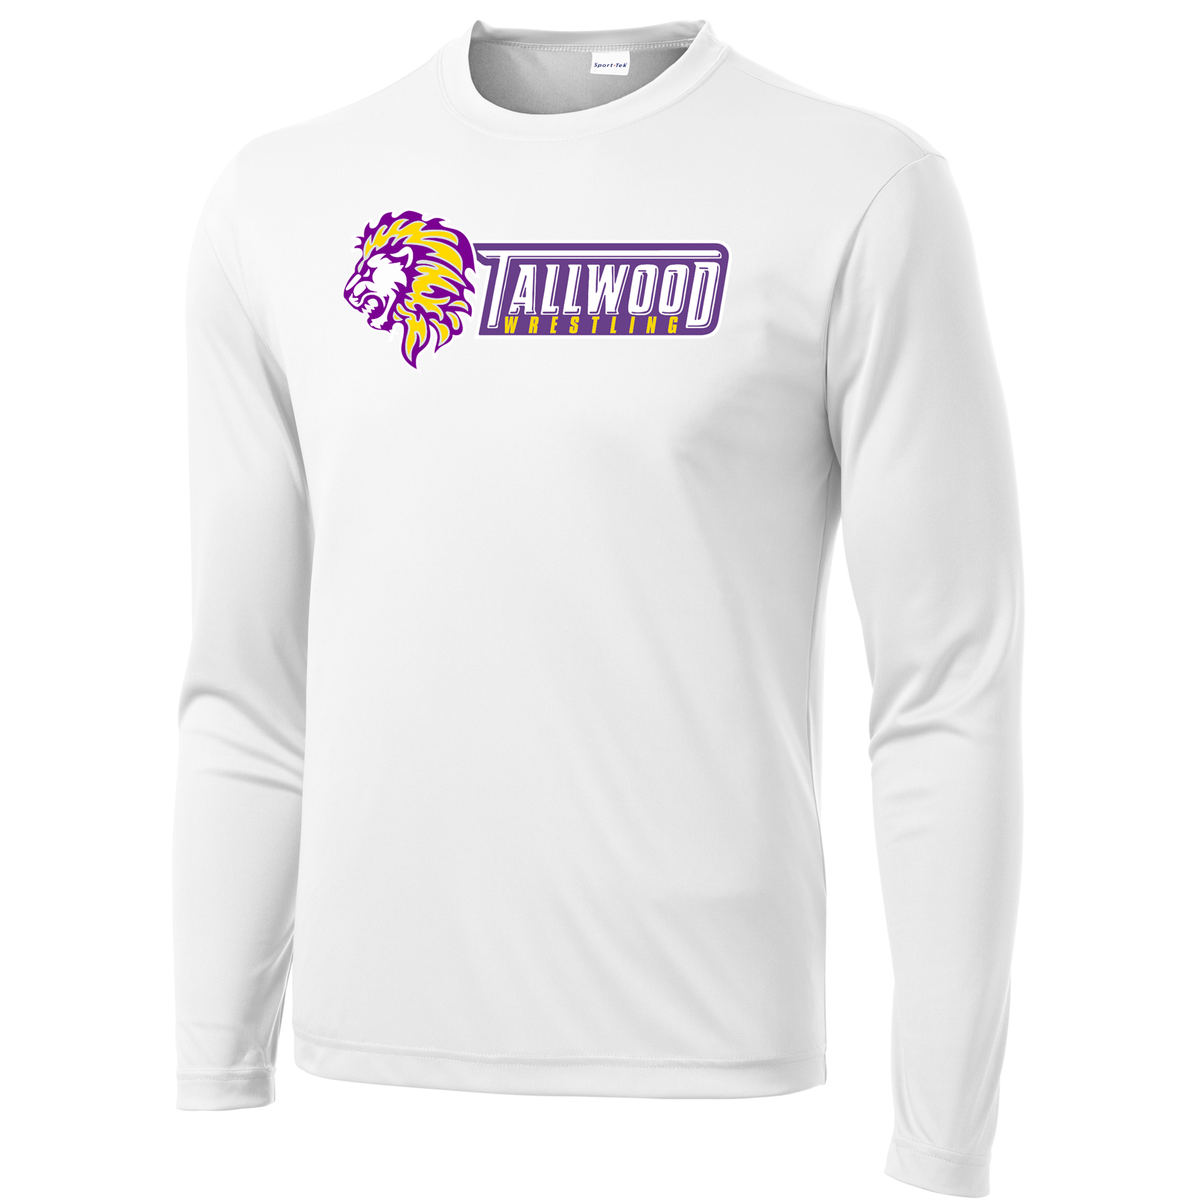 Tallwood Wrestling Long Sleeve Performance Shirt